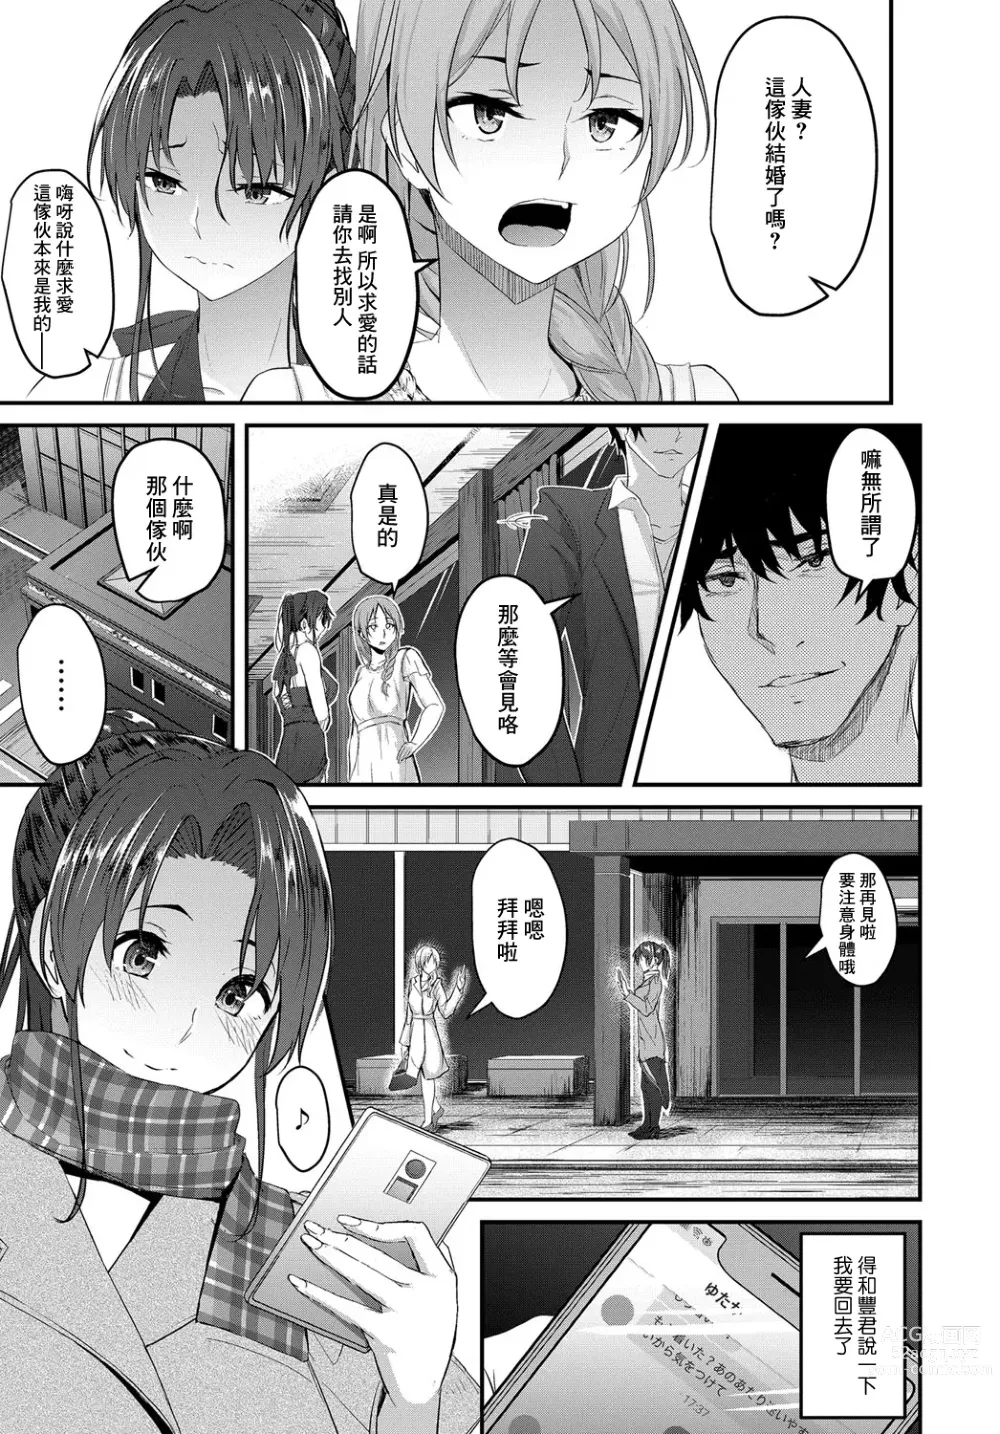 Page 5 of manga Dousoukai no Ato de